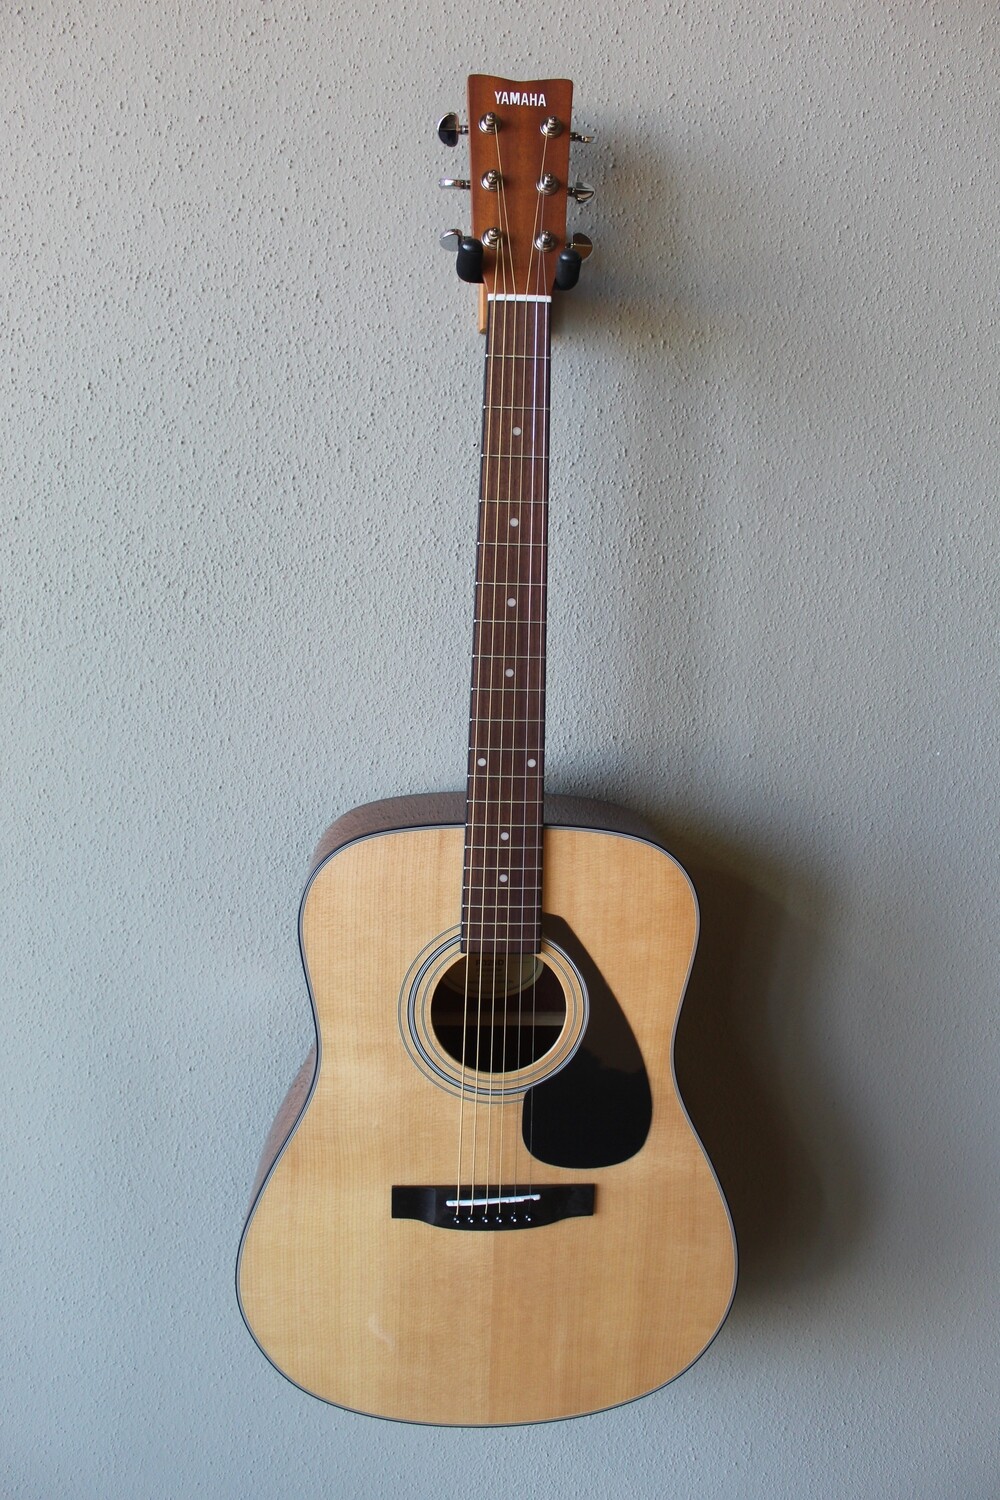 Yamaha F325D Steel String Acoustic Guitar with Gig Bag - Natural